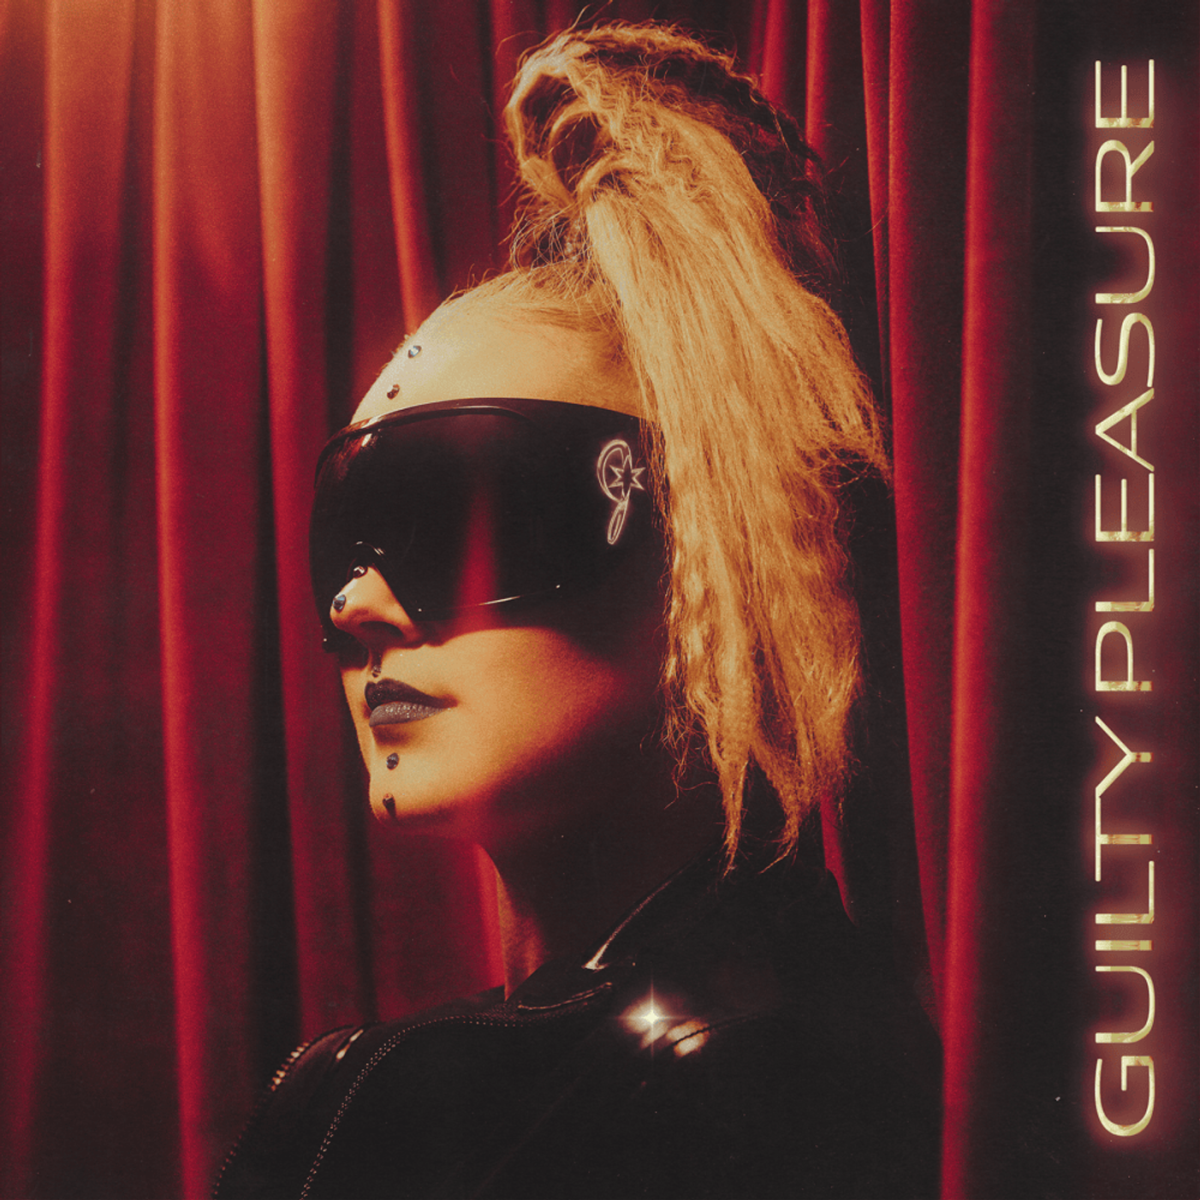 “Guilty Pleasure” is JoJo Siwa’s newest release. It is her fourth EP.